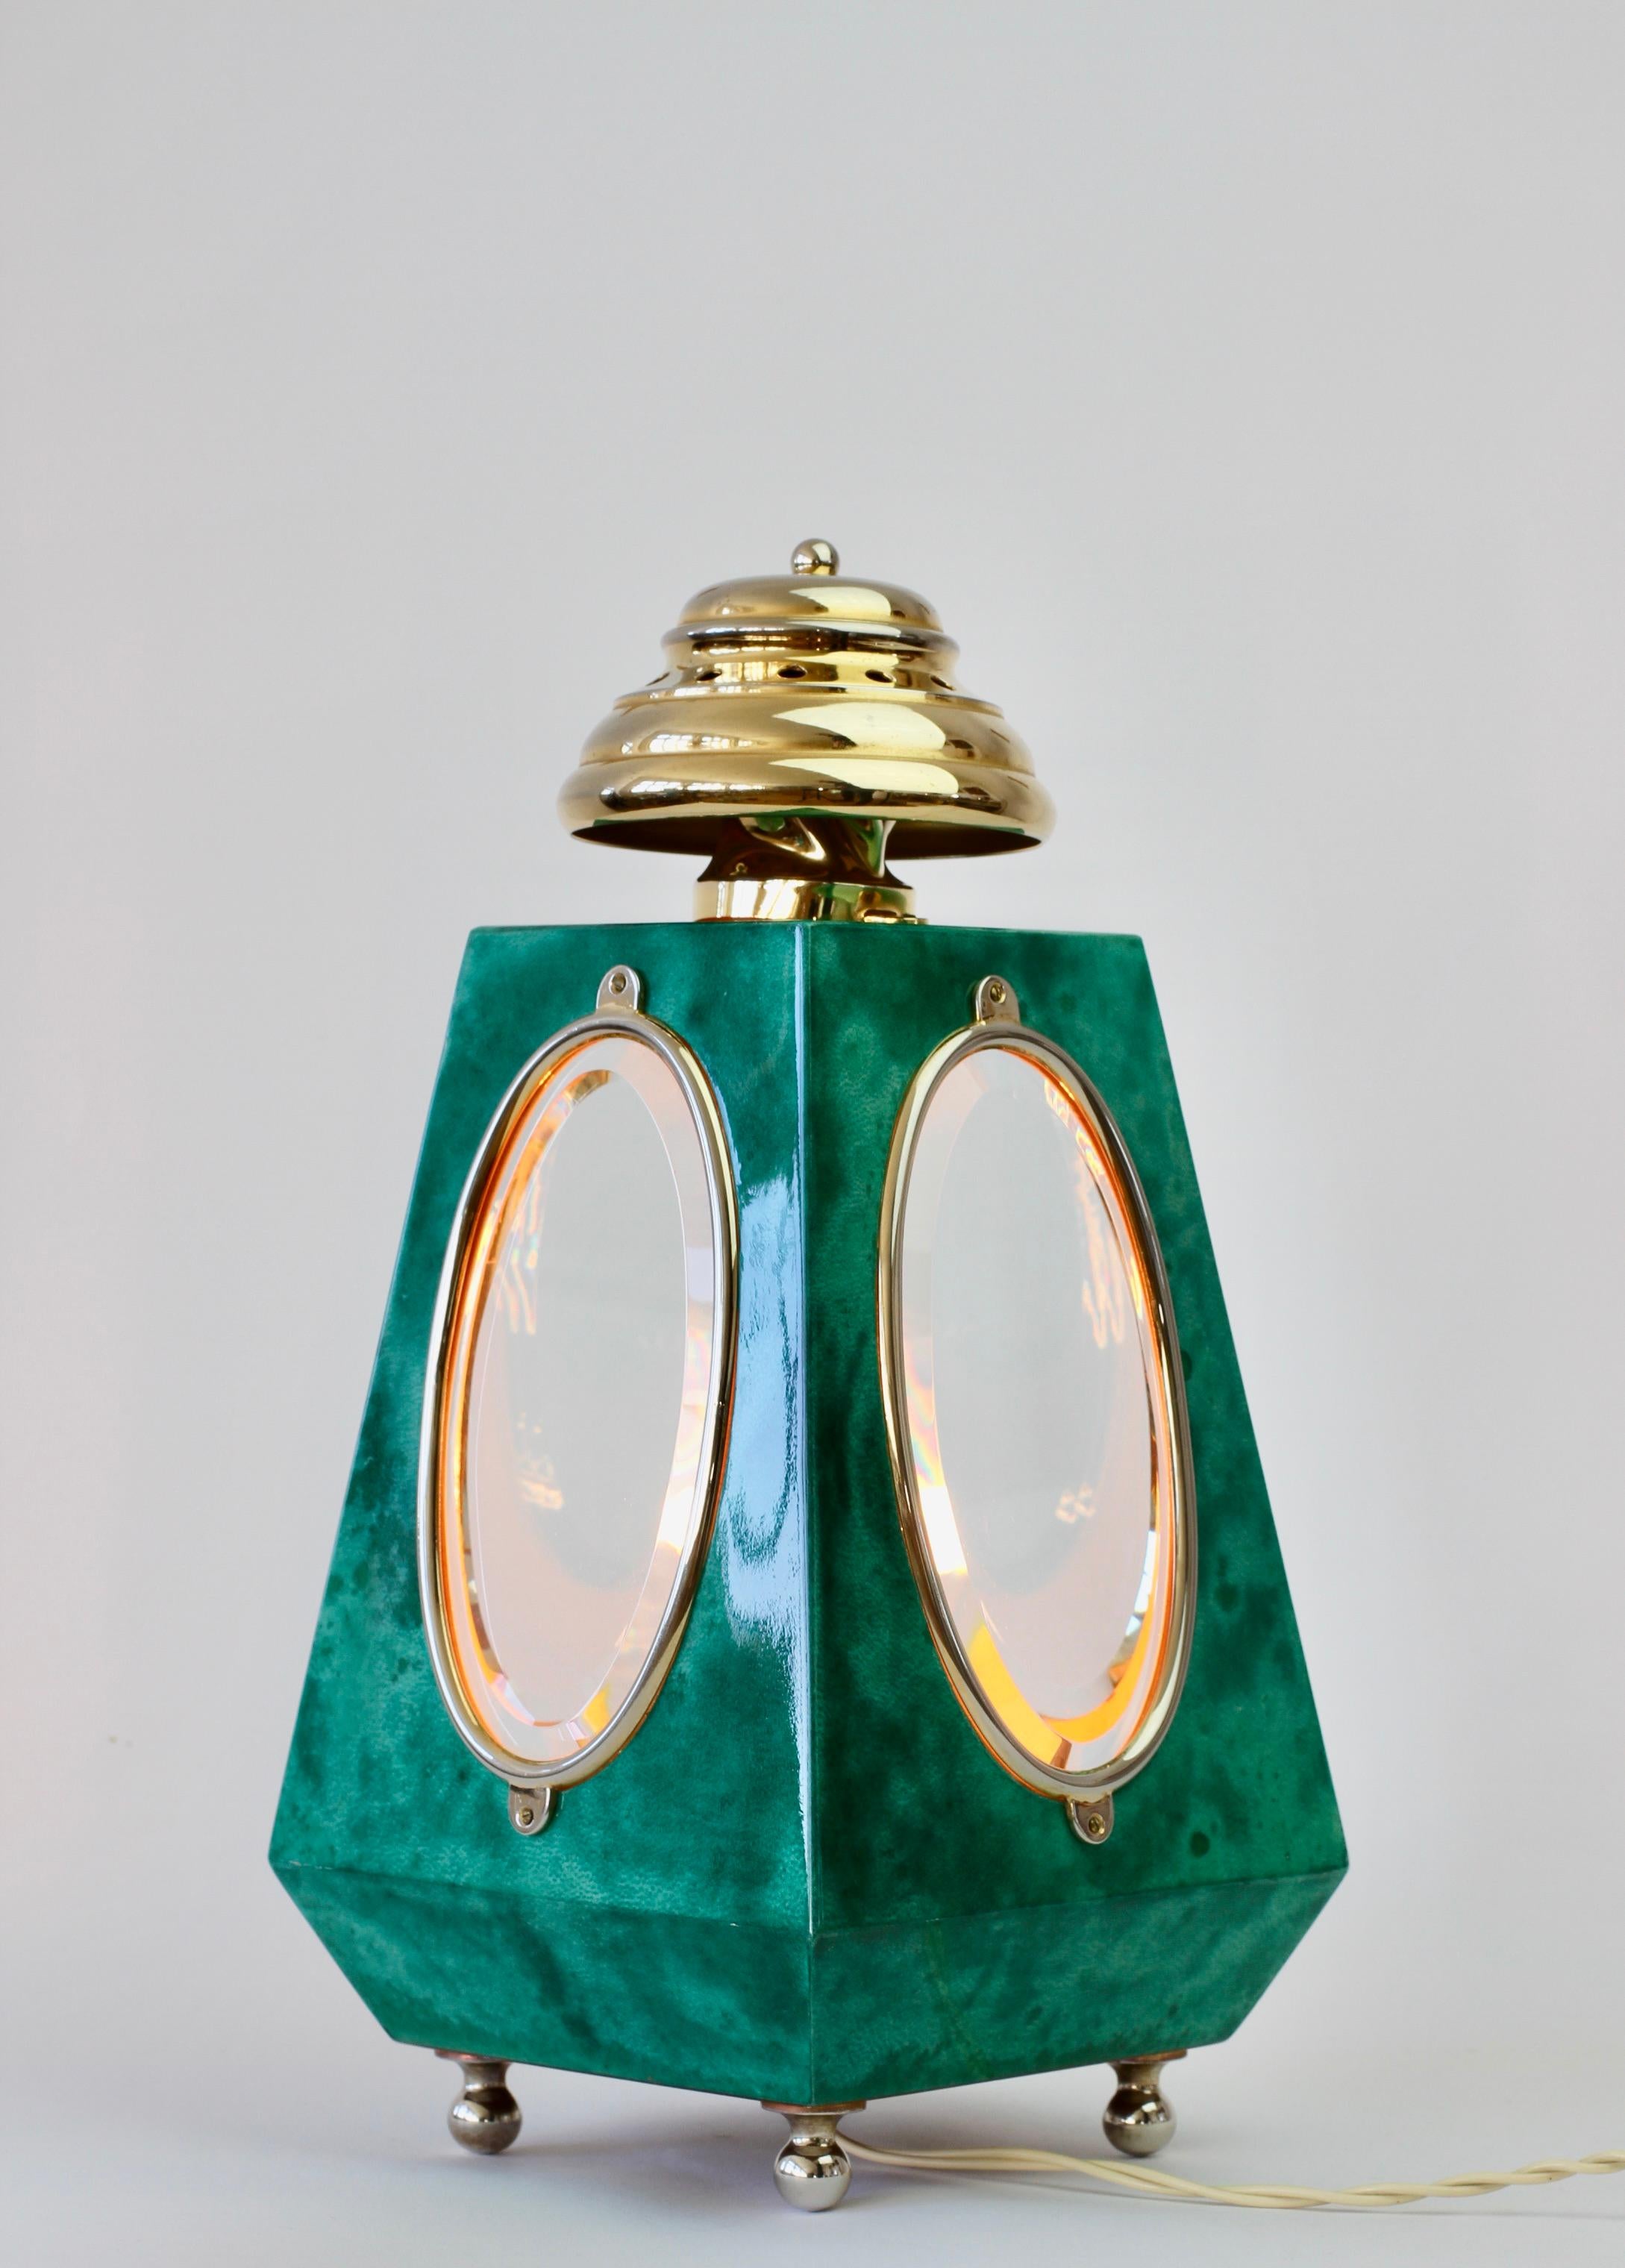 Aldo Tura 1960s Midcentury Table Lamp / Lantern in Green Italian Goatskin 5